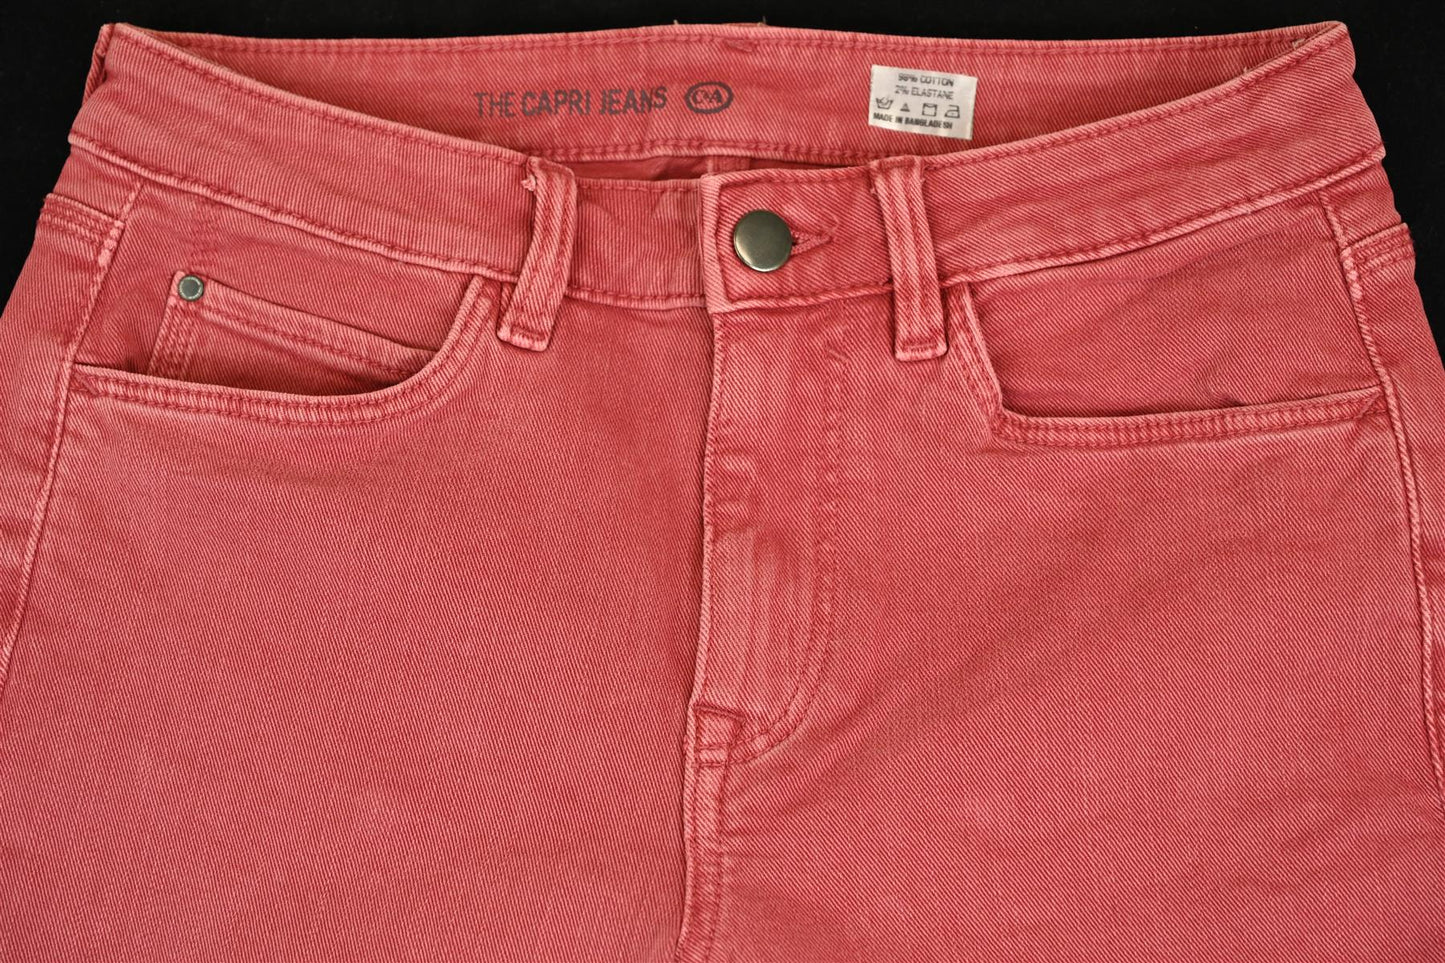 C&A Women's Capri Jeans Cotton Red Maroon Stretch Denim Trousers Brand New